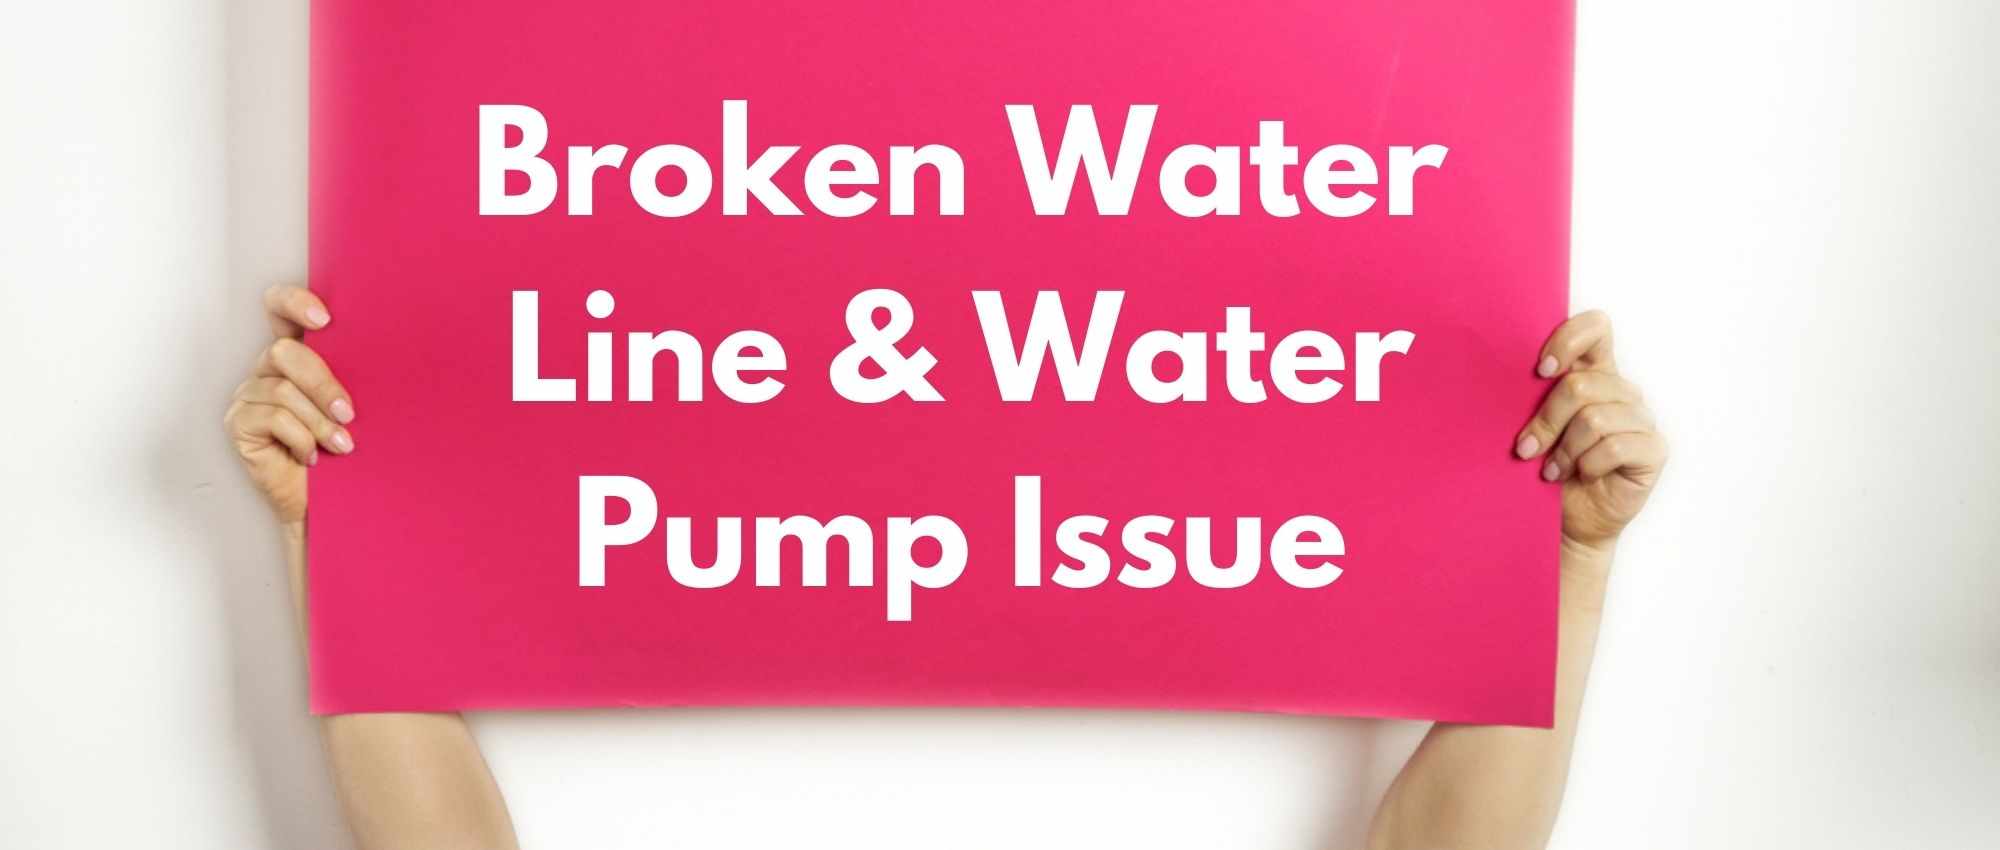 Broken Water Line & Water Pump Issue